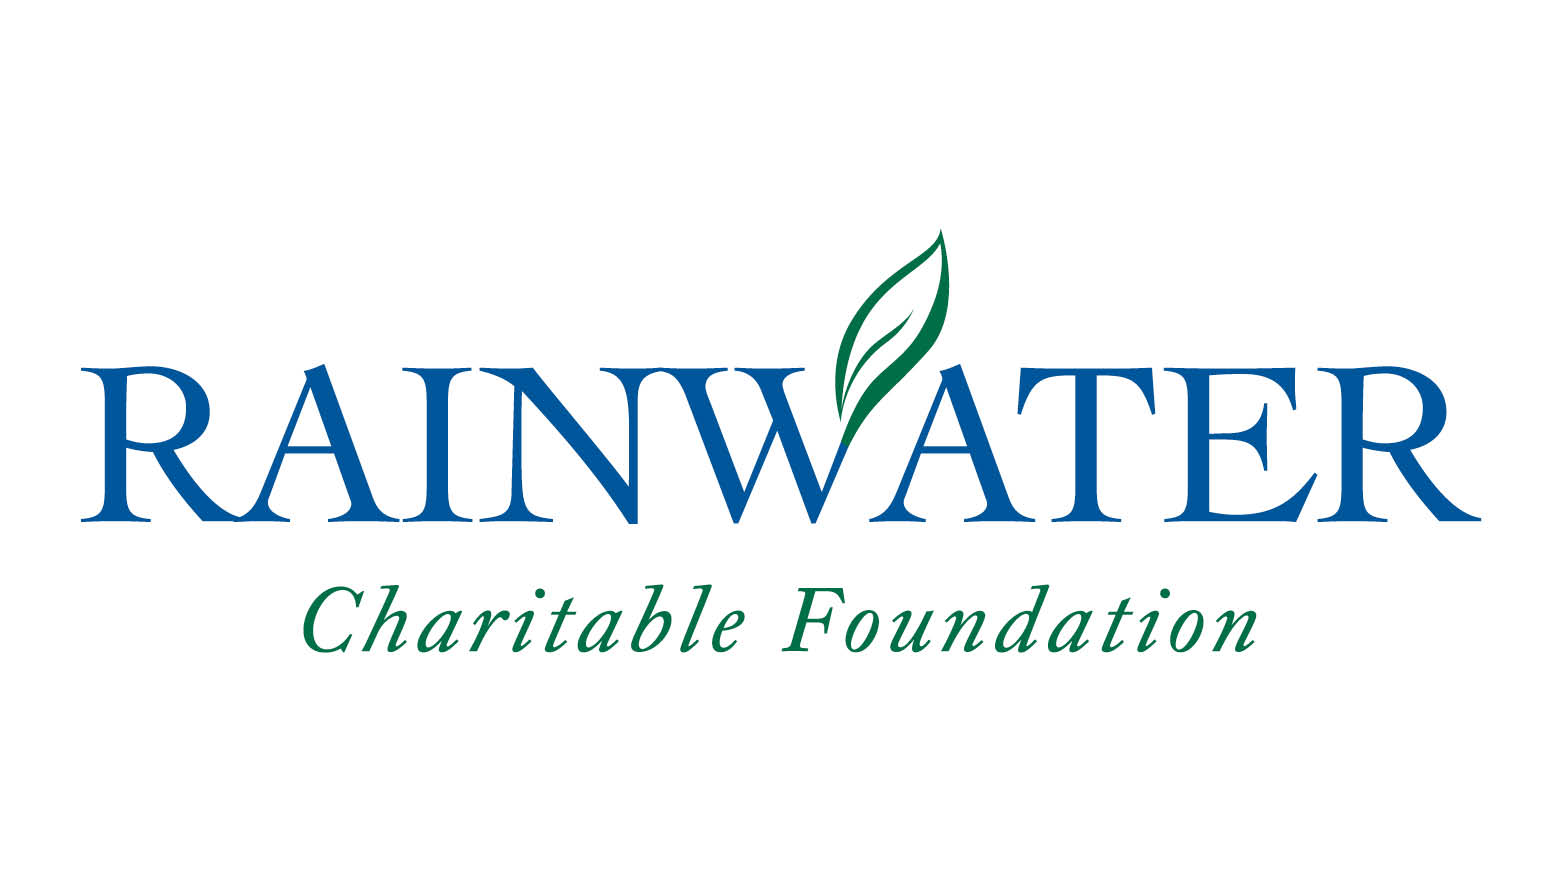 Rainwater Charitable fund is a sponsor of Neuroscience 2021